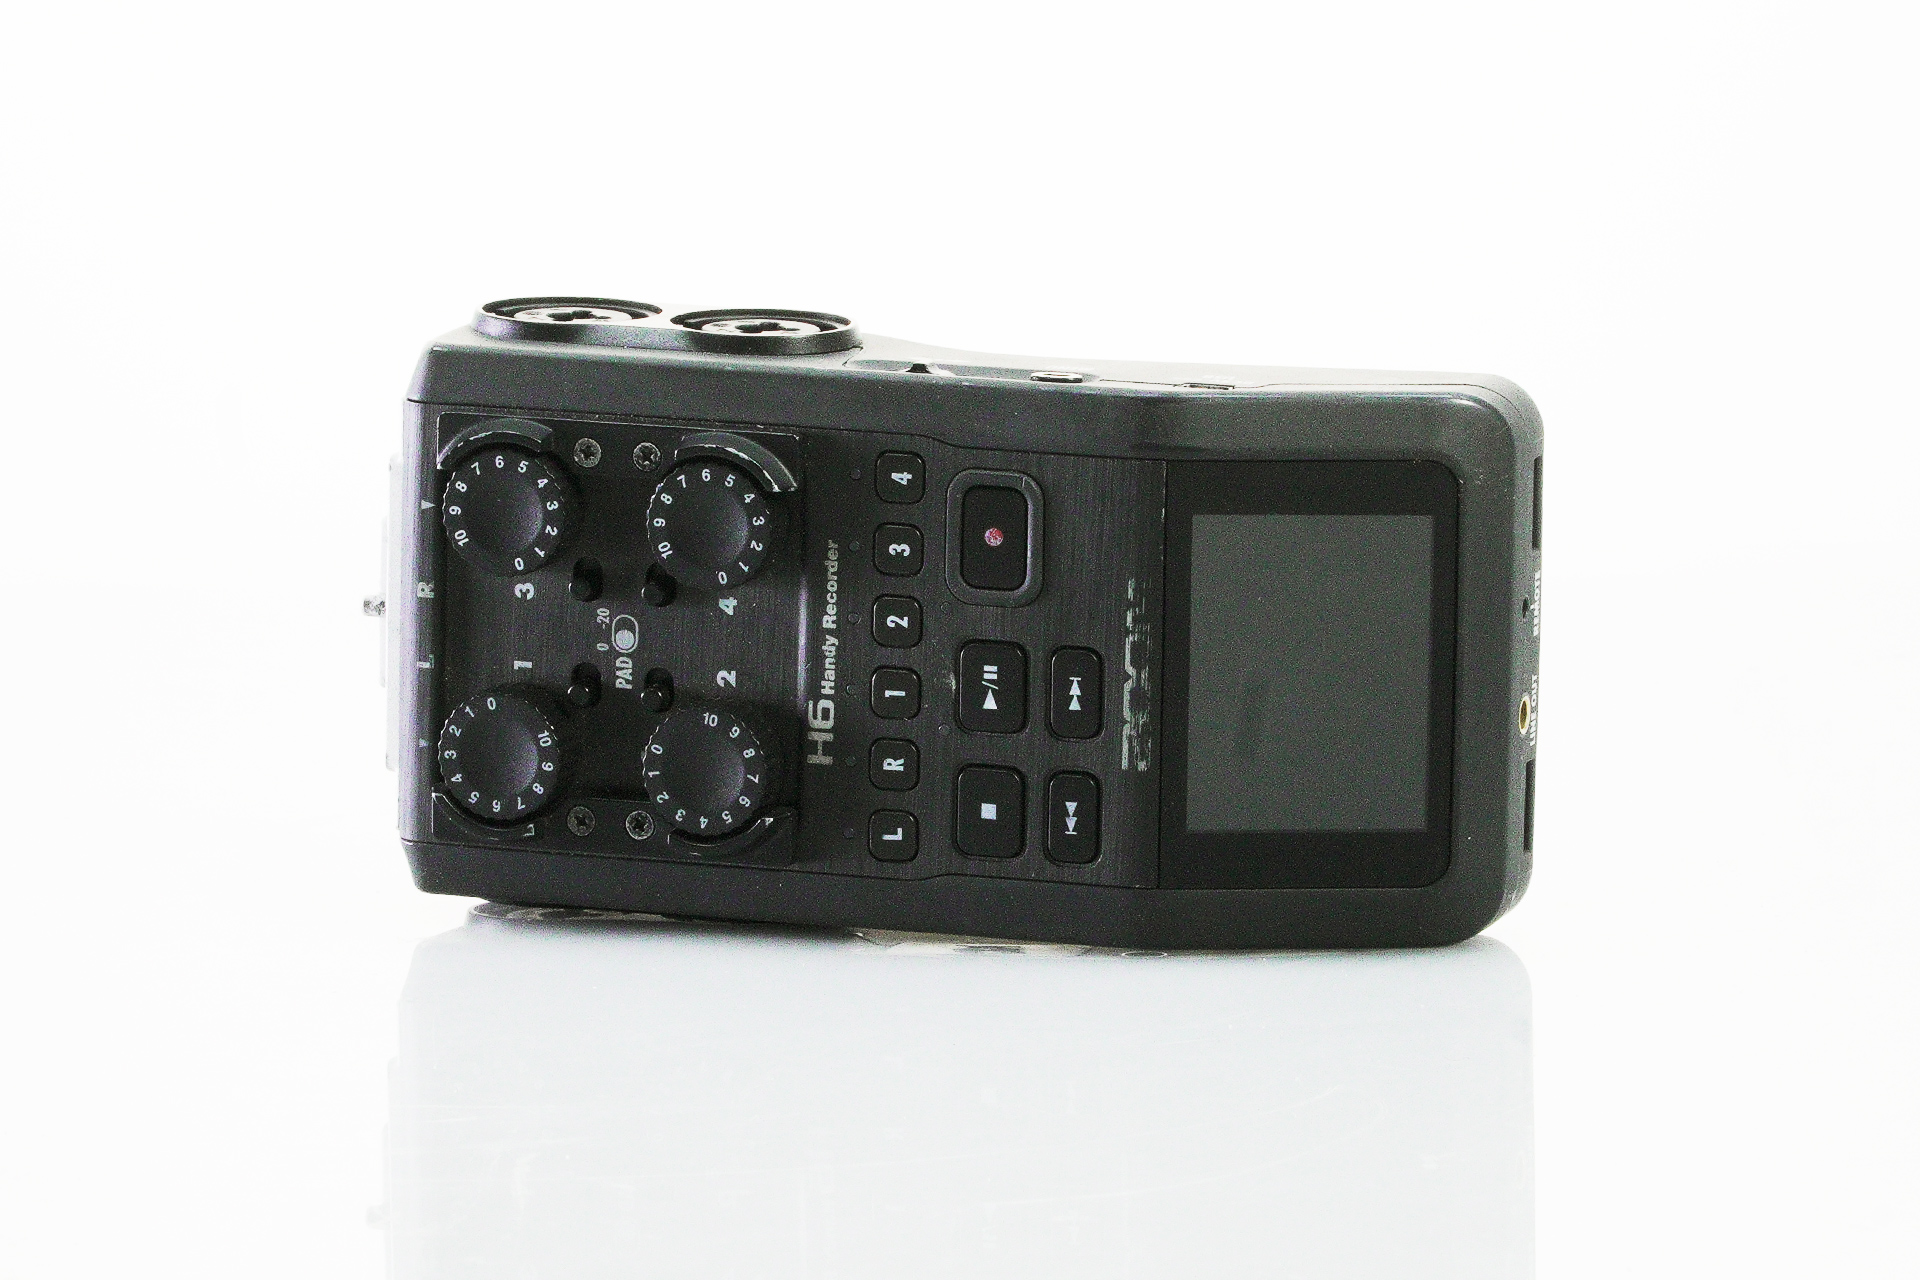 ZOOM H6 Portable Recorder Rental from Cinevo - CINEVO